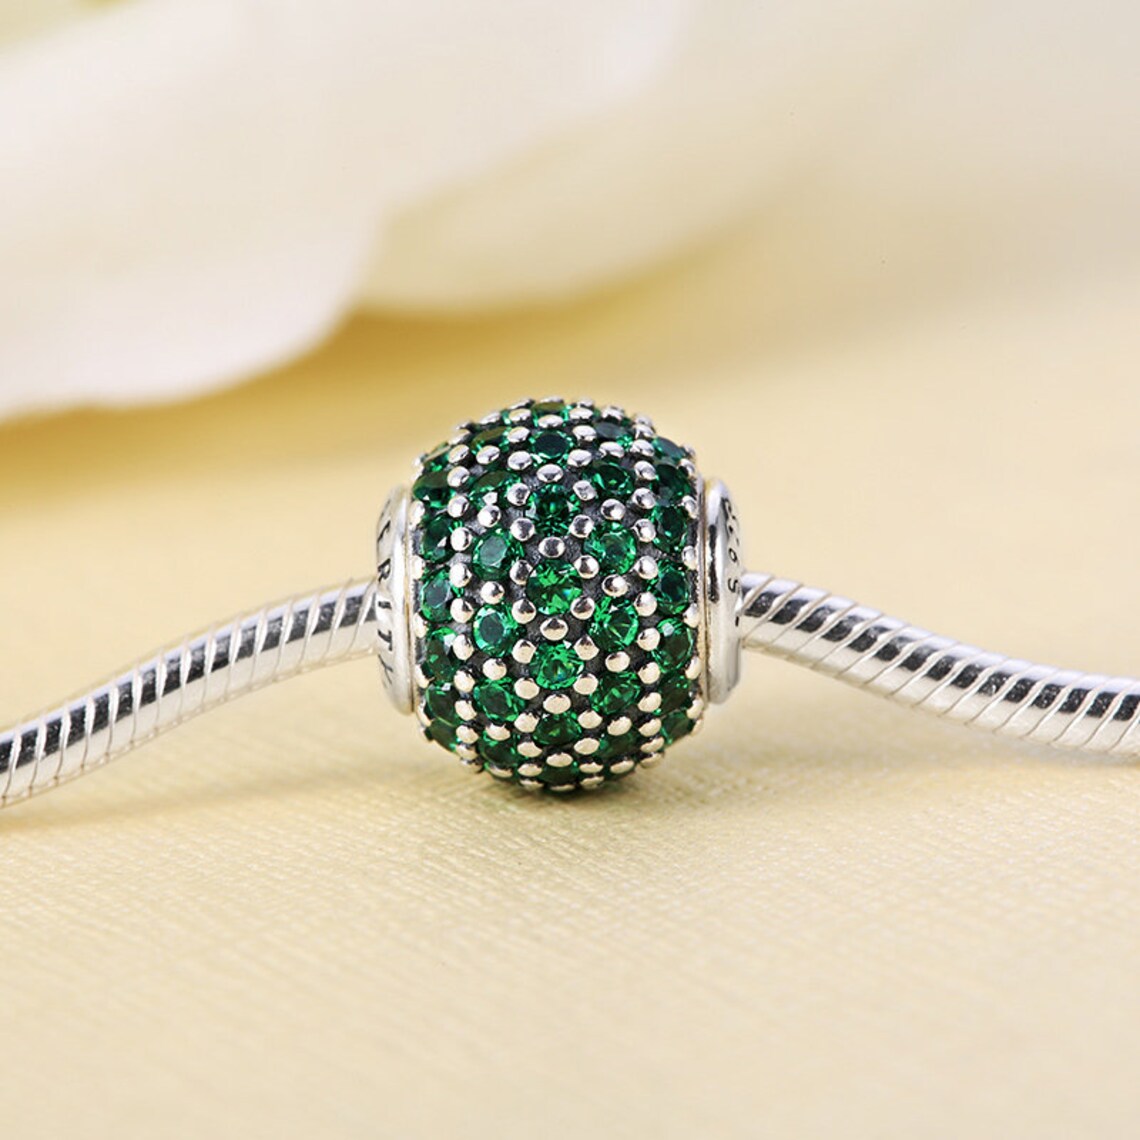 925 Sterling Silver Essence PROSPERITY & Green Pave CZ Bead Only Fits European Jewelry Pandora Essence Style Charm Bracelets